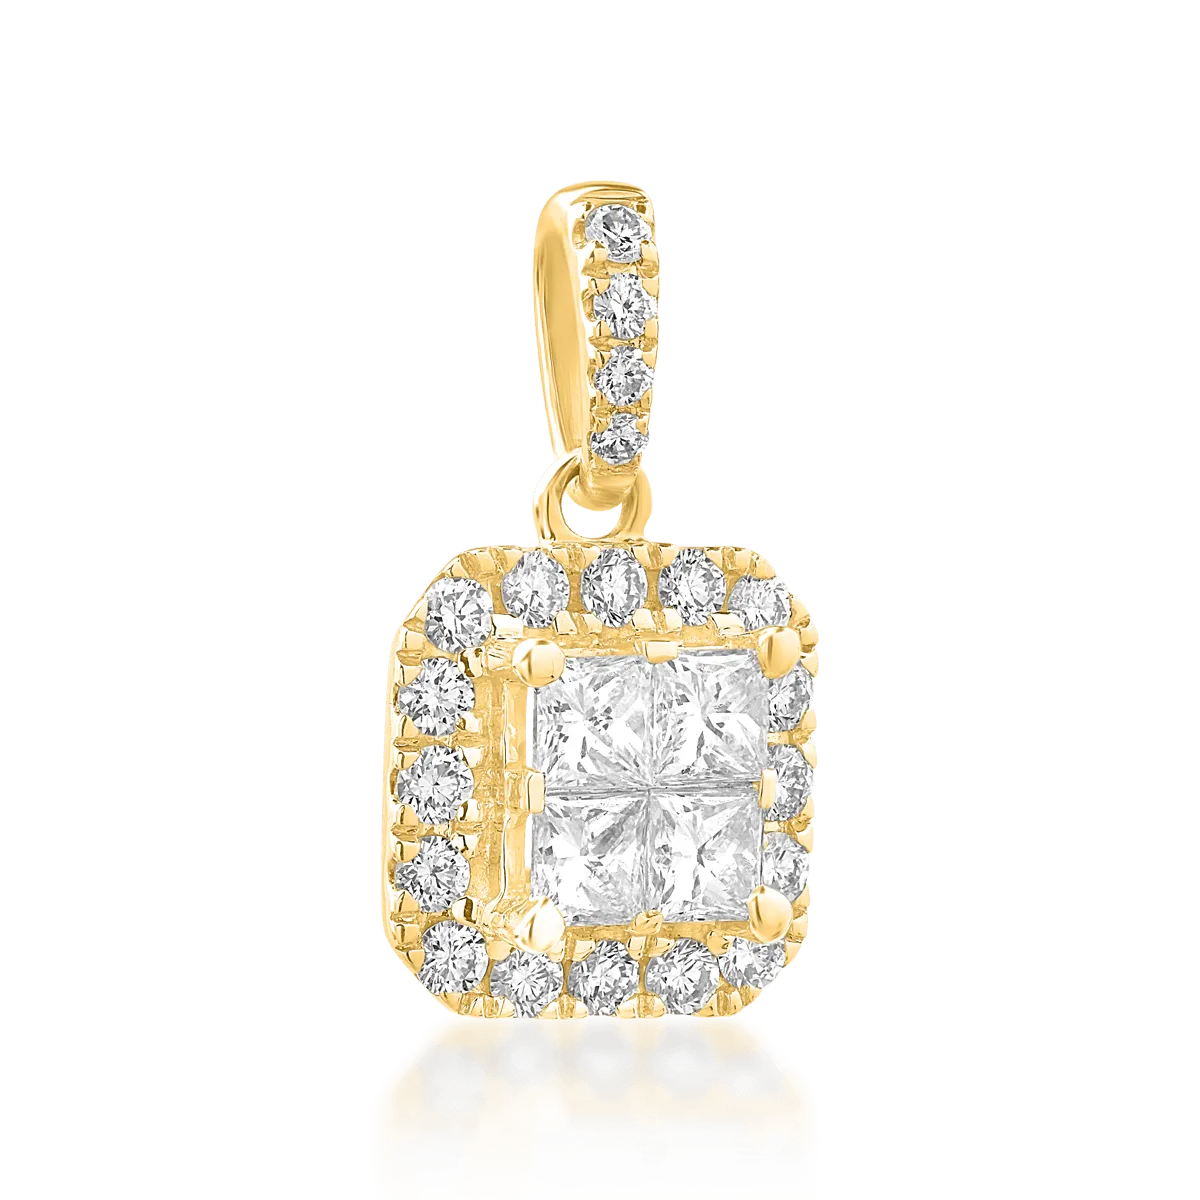 18K yellow gold pendant with diamonds of 0.45ct